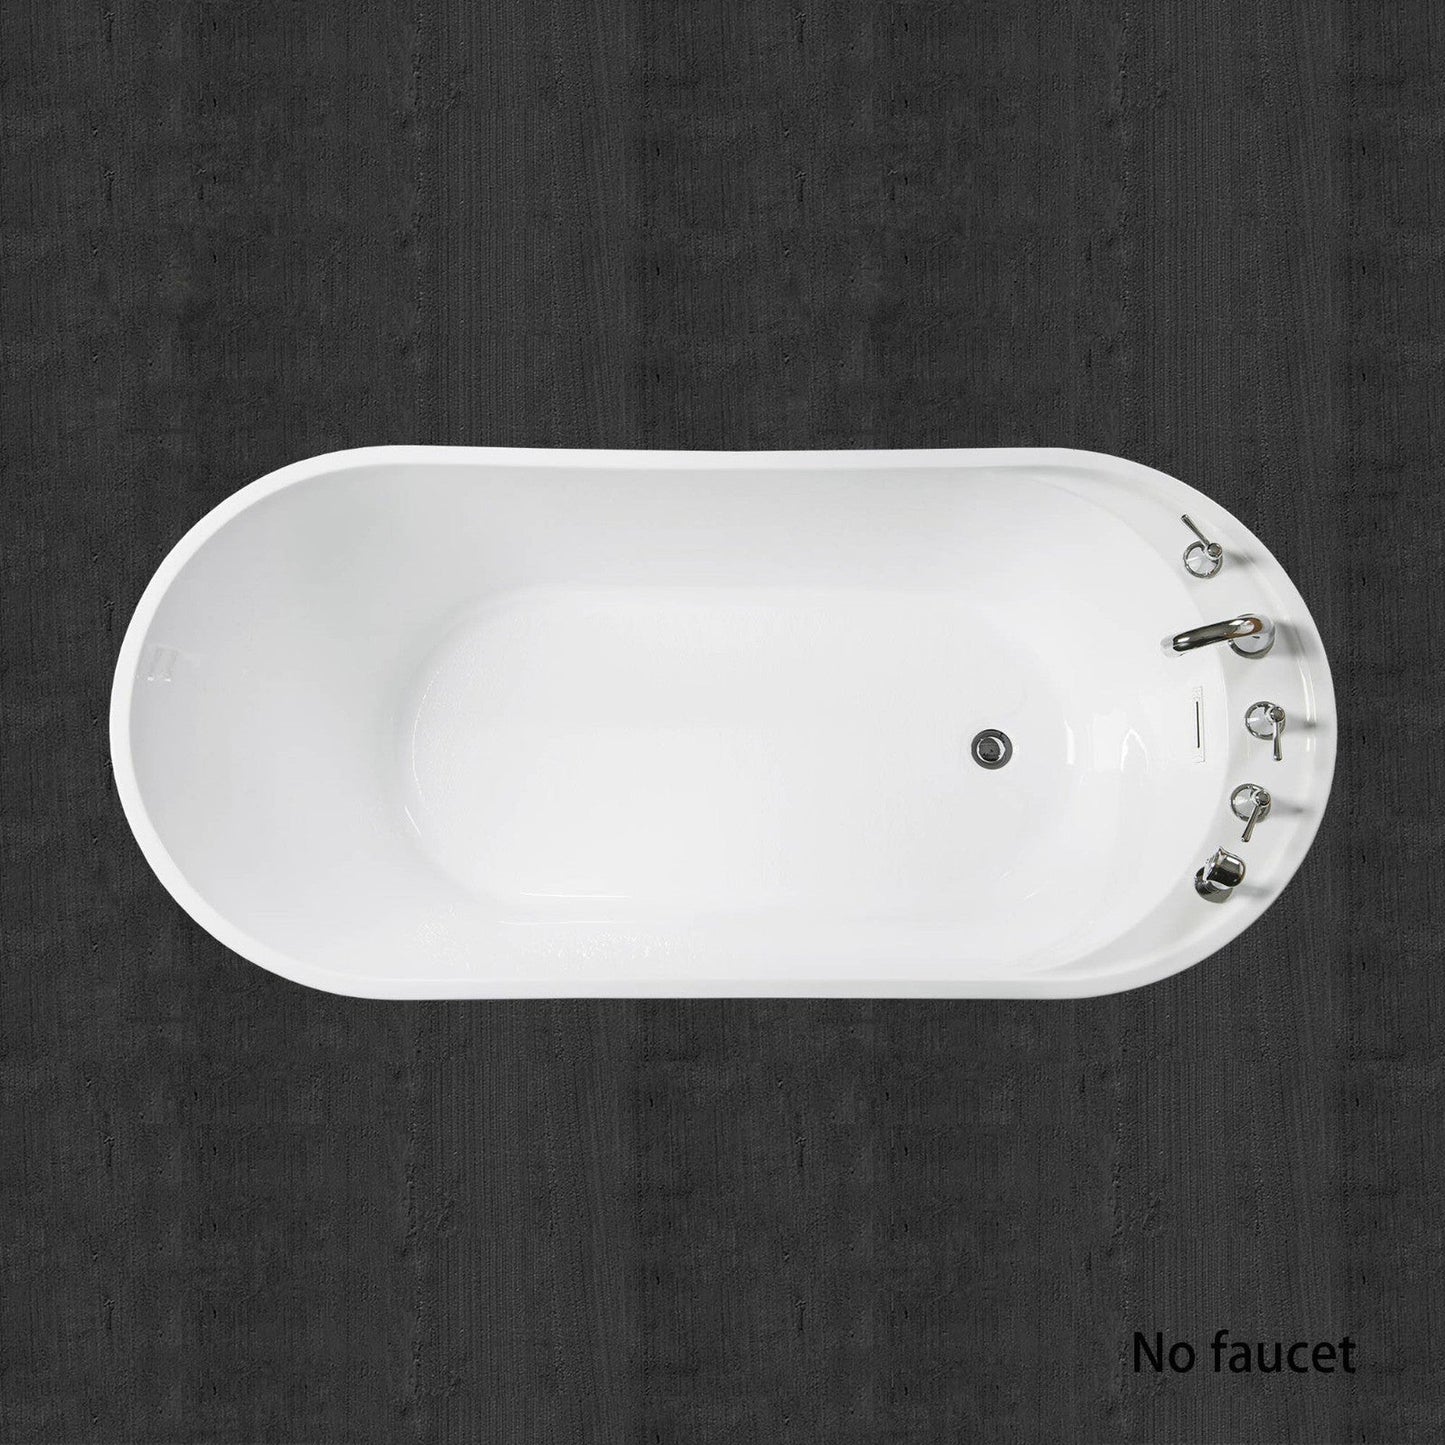 WoodBridge B0083 59" White Acrylic Freestanding Soaking Bathtub With Chrome Drain, Overflow, F0021 Tub Filler and Caddy Tray